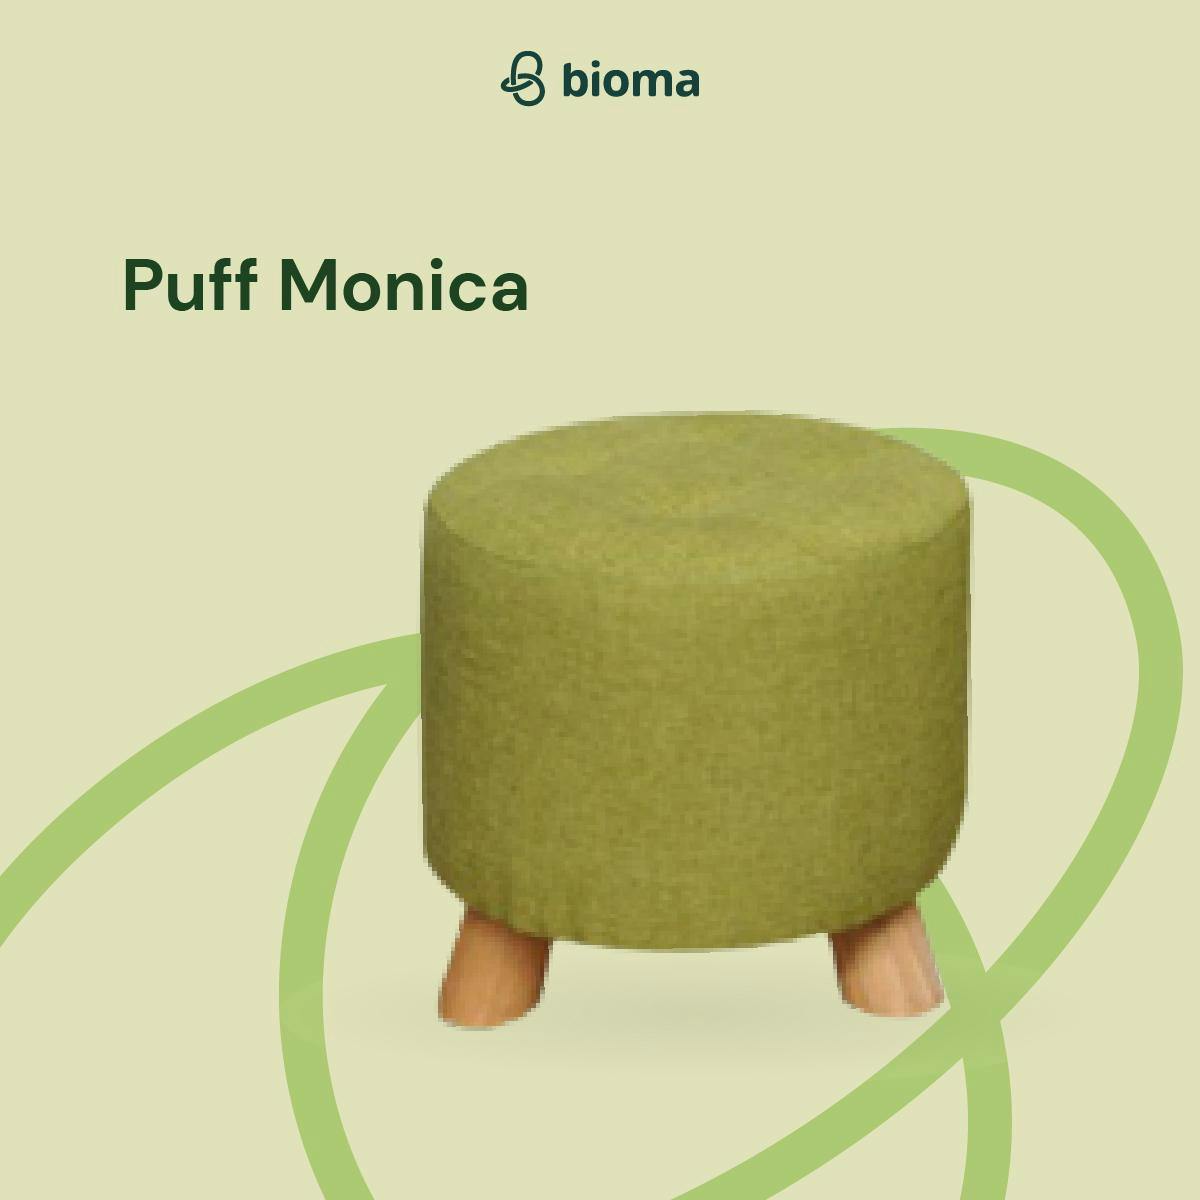 Puff Monica